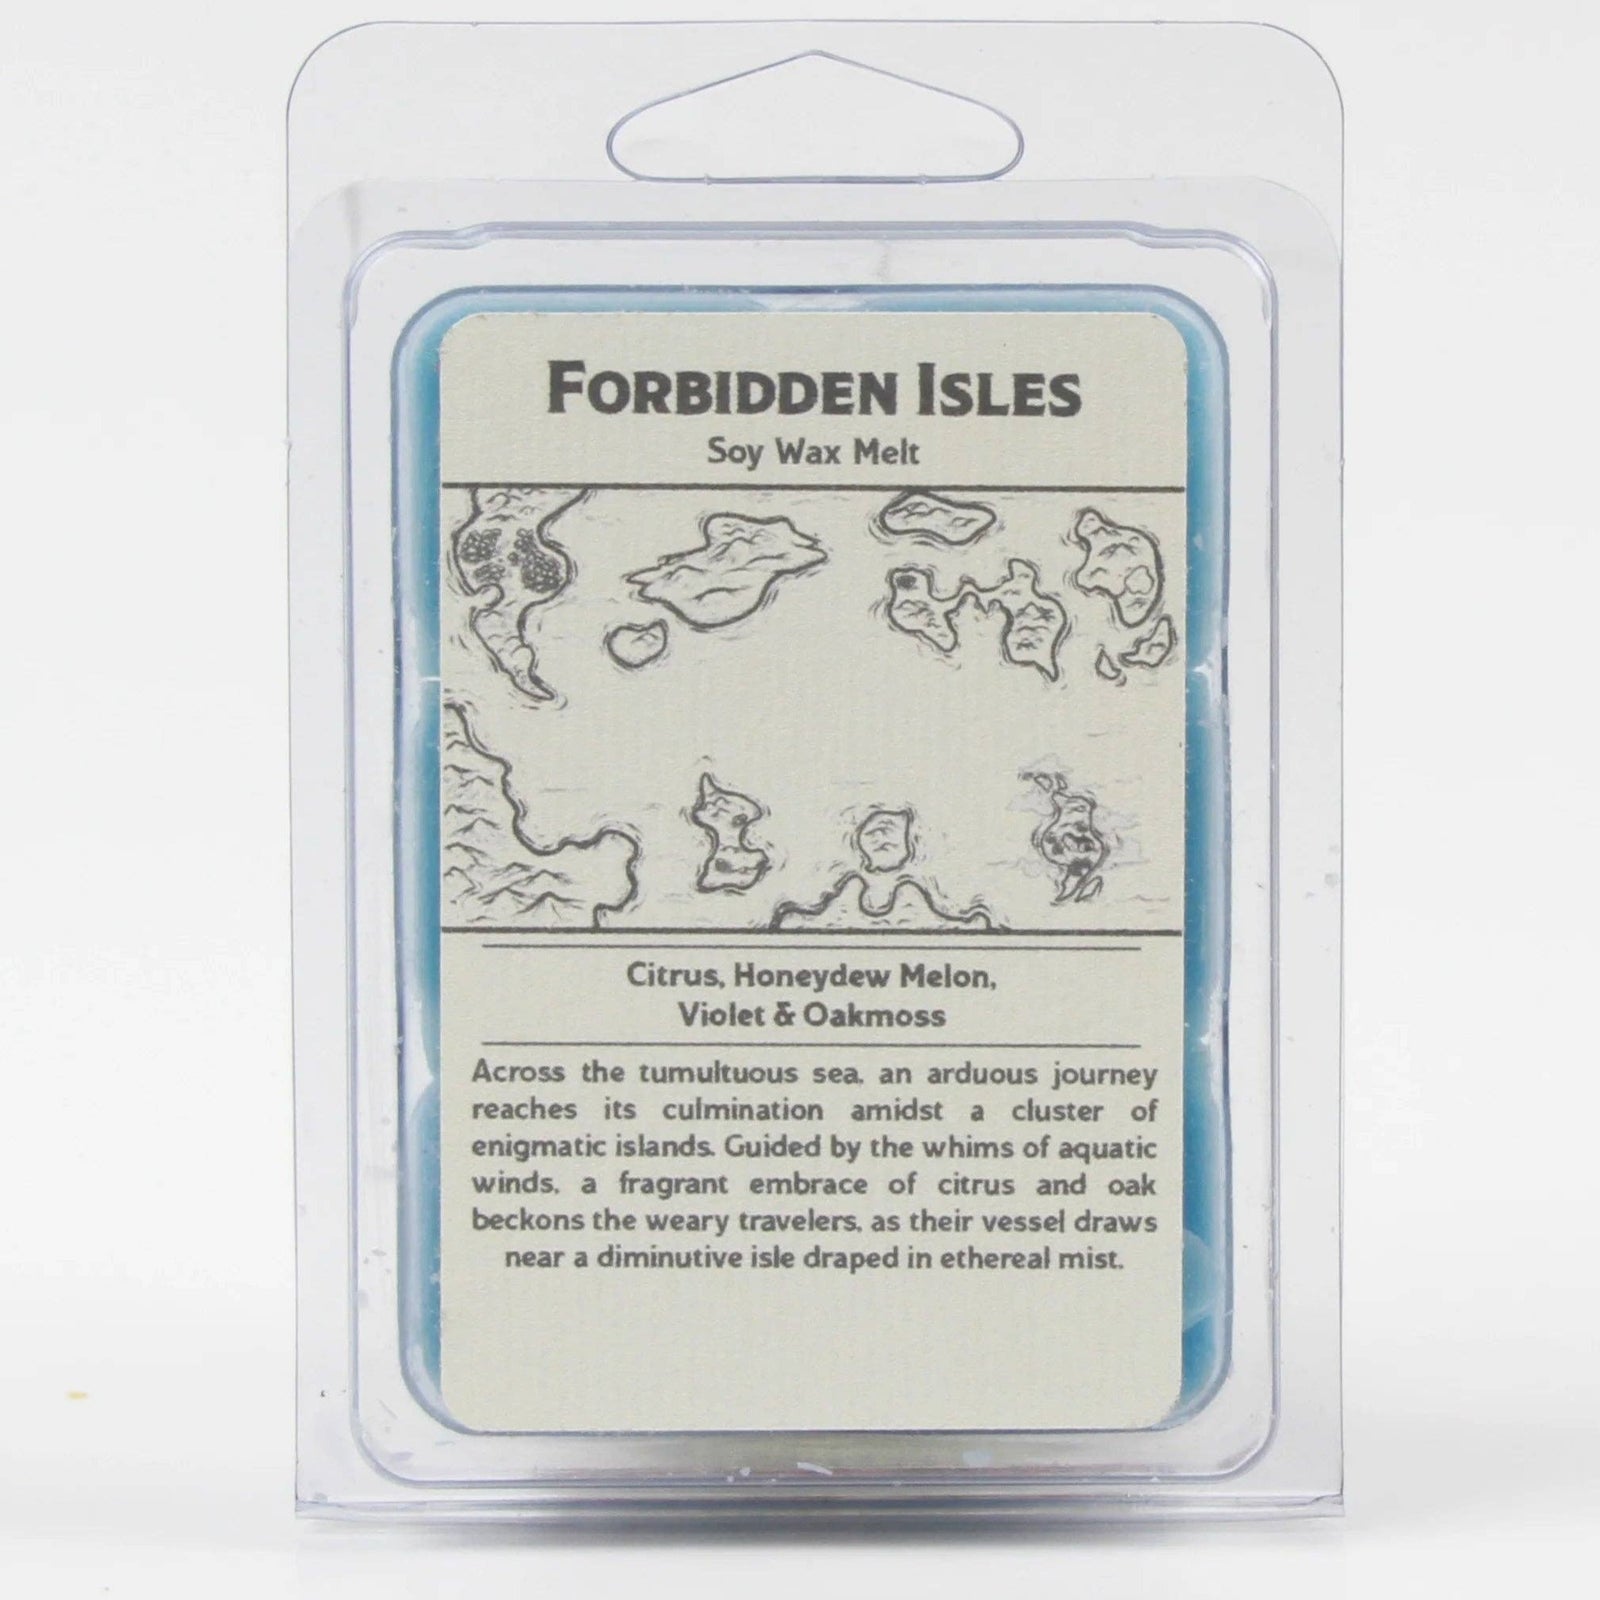 Forbidden Isles - Wax Melt Scent Notes: Citrus, Honeydew Melon, Violet & Oakmoss